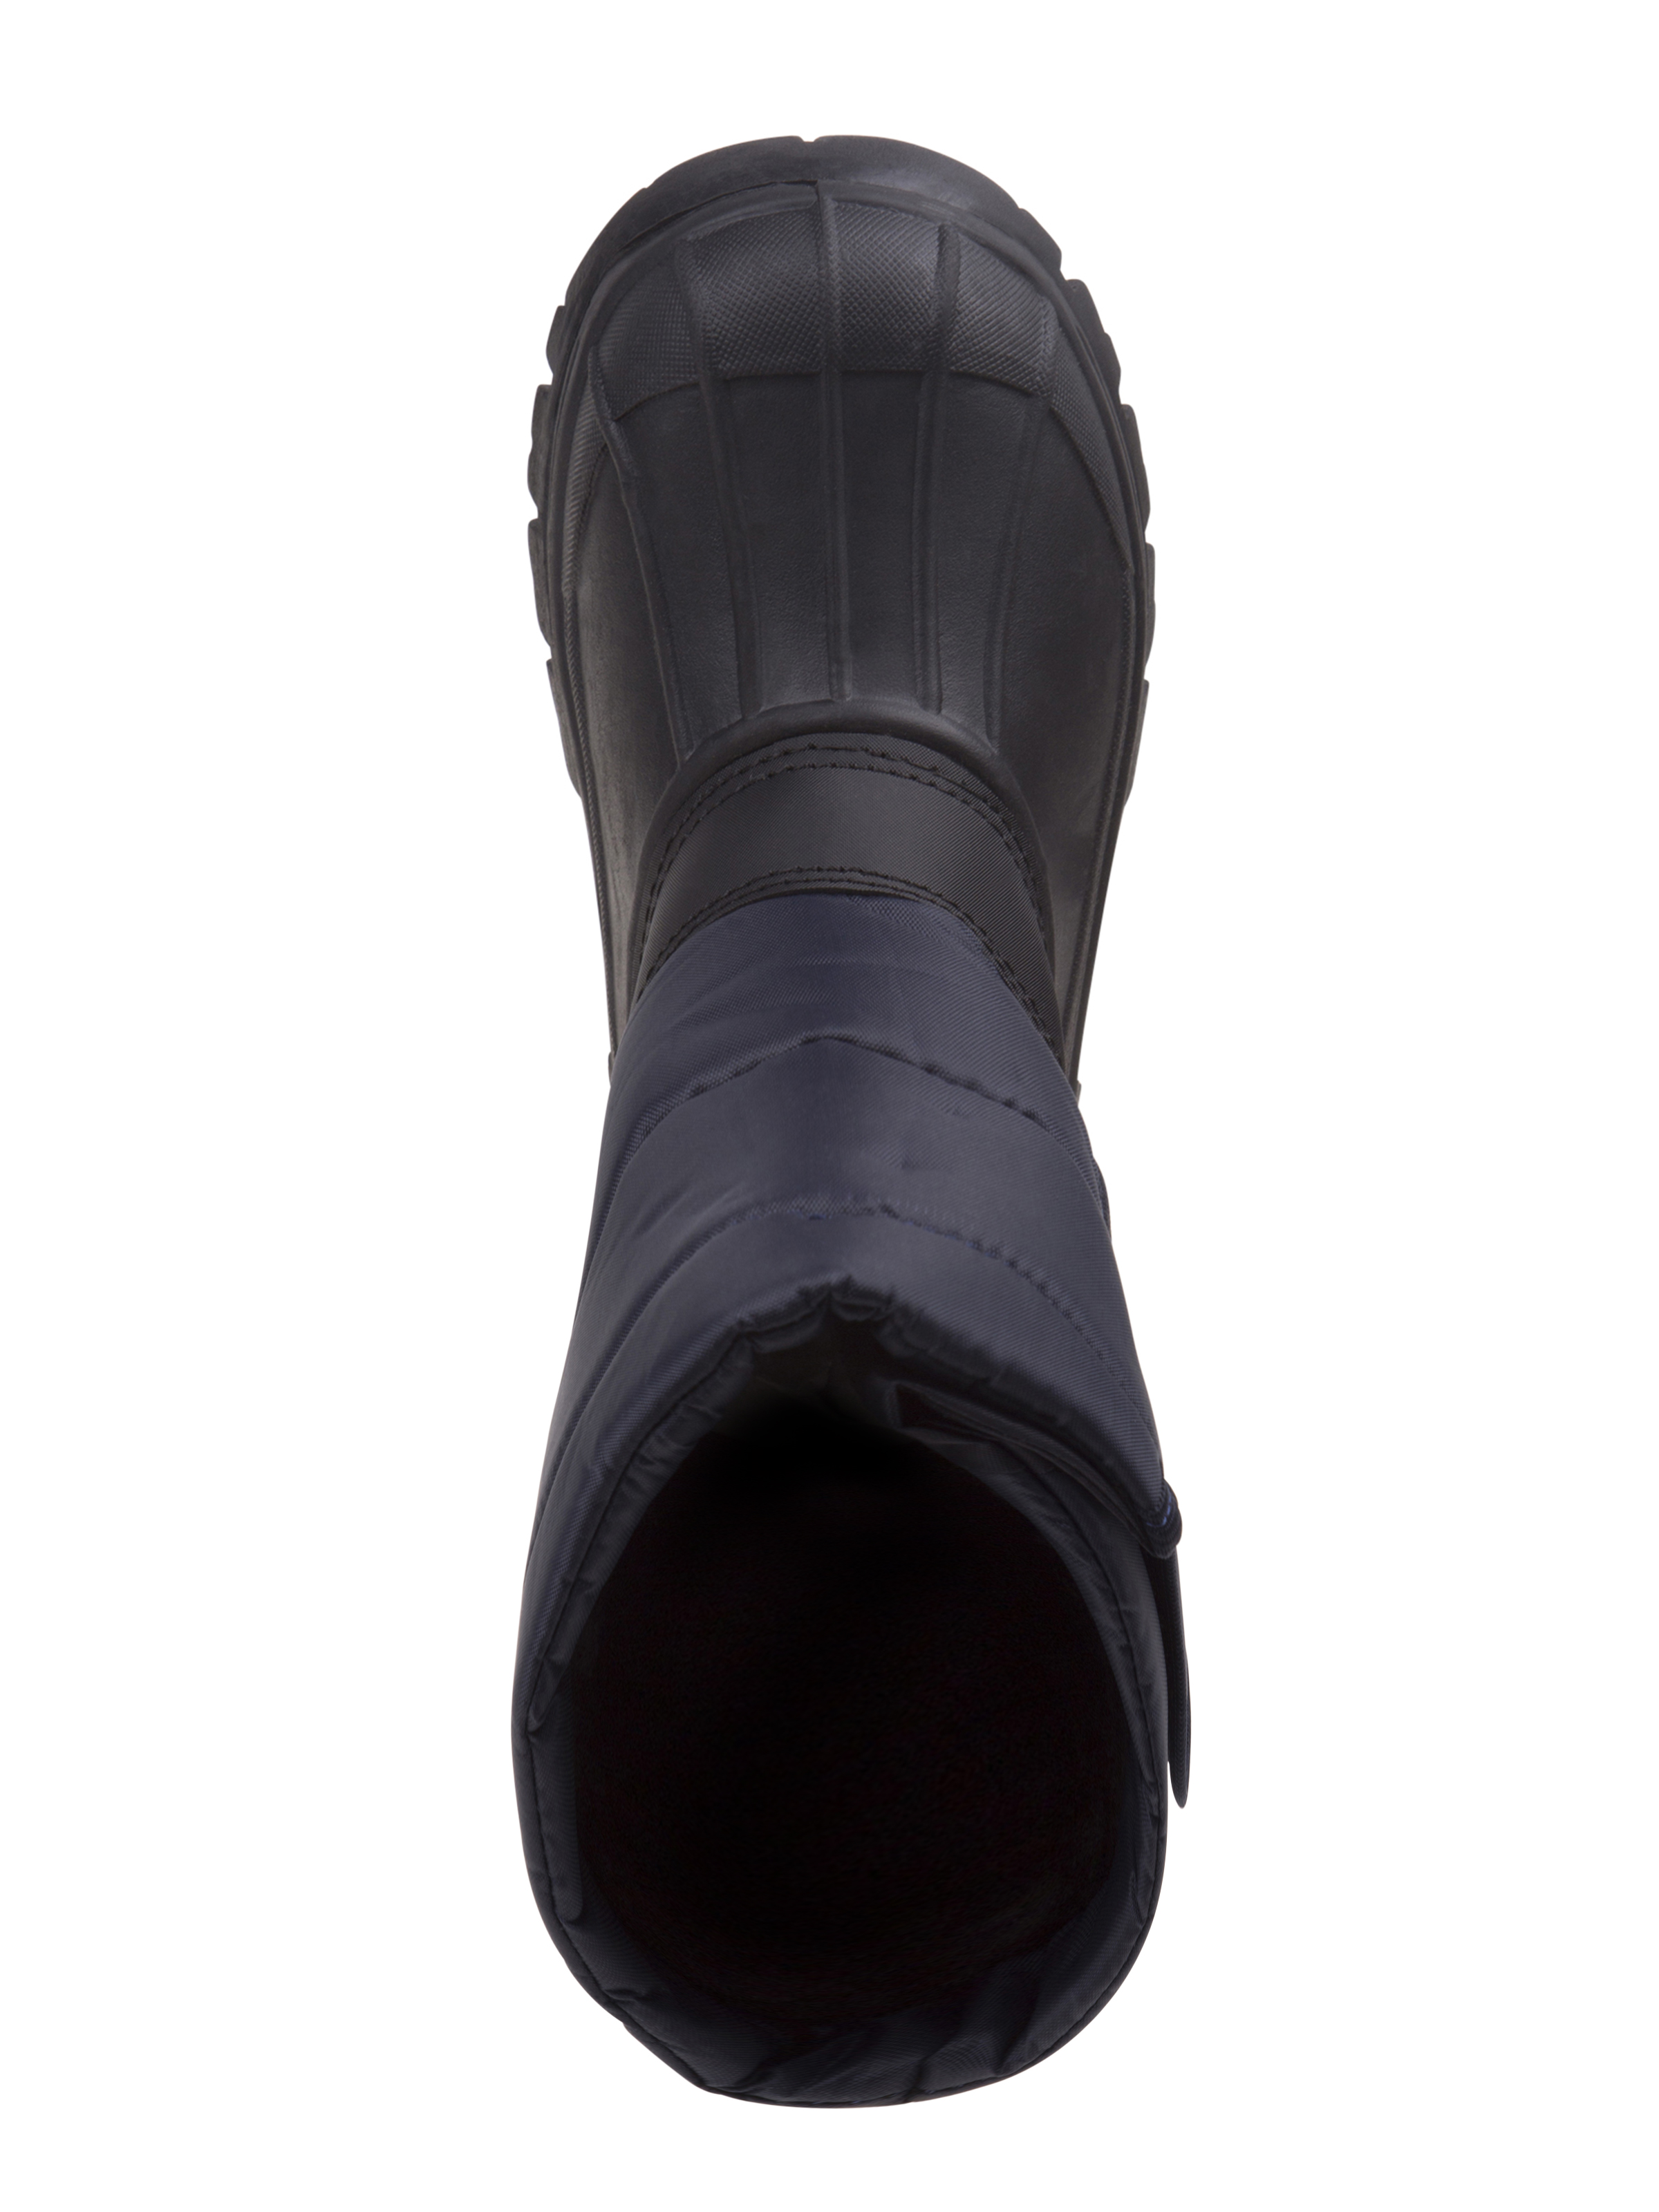 Rugger Bear Boys' Velcro Snow Boots - image 4 of 5